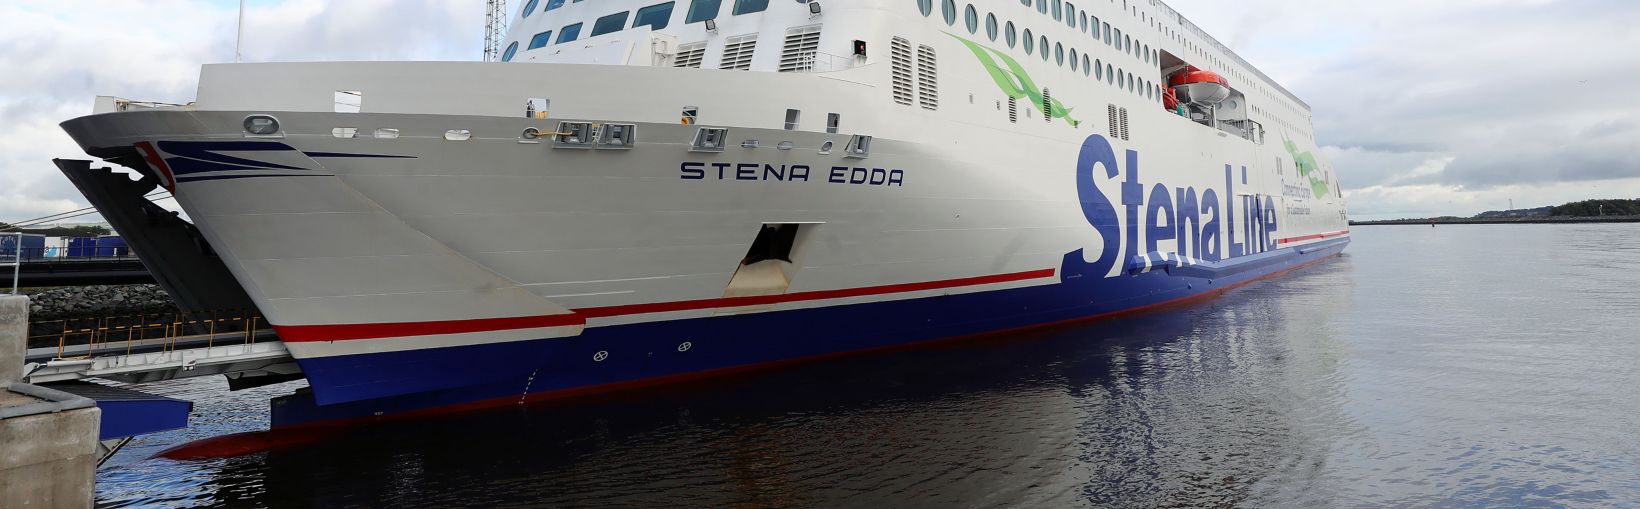 Færgen Stena Edda ligger til kaj i Belfast Havn